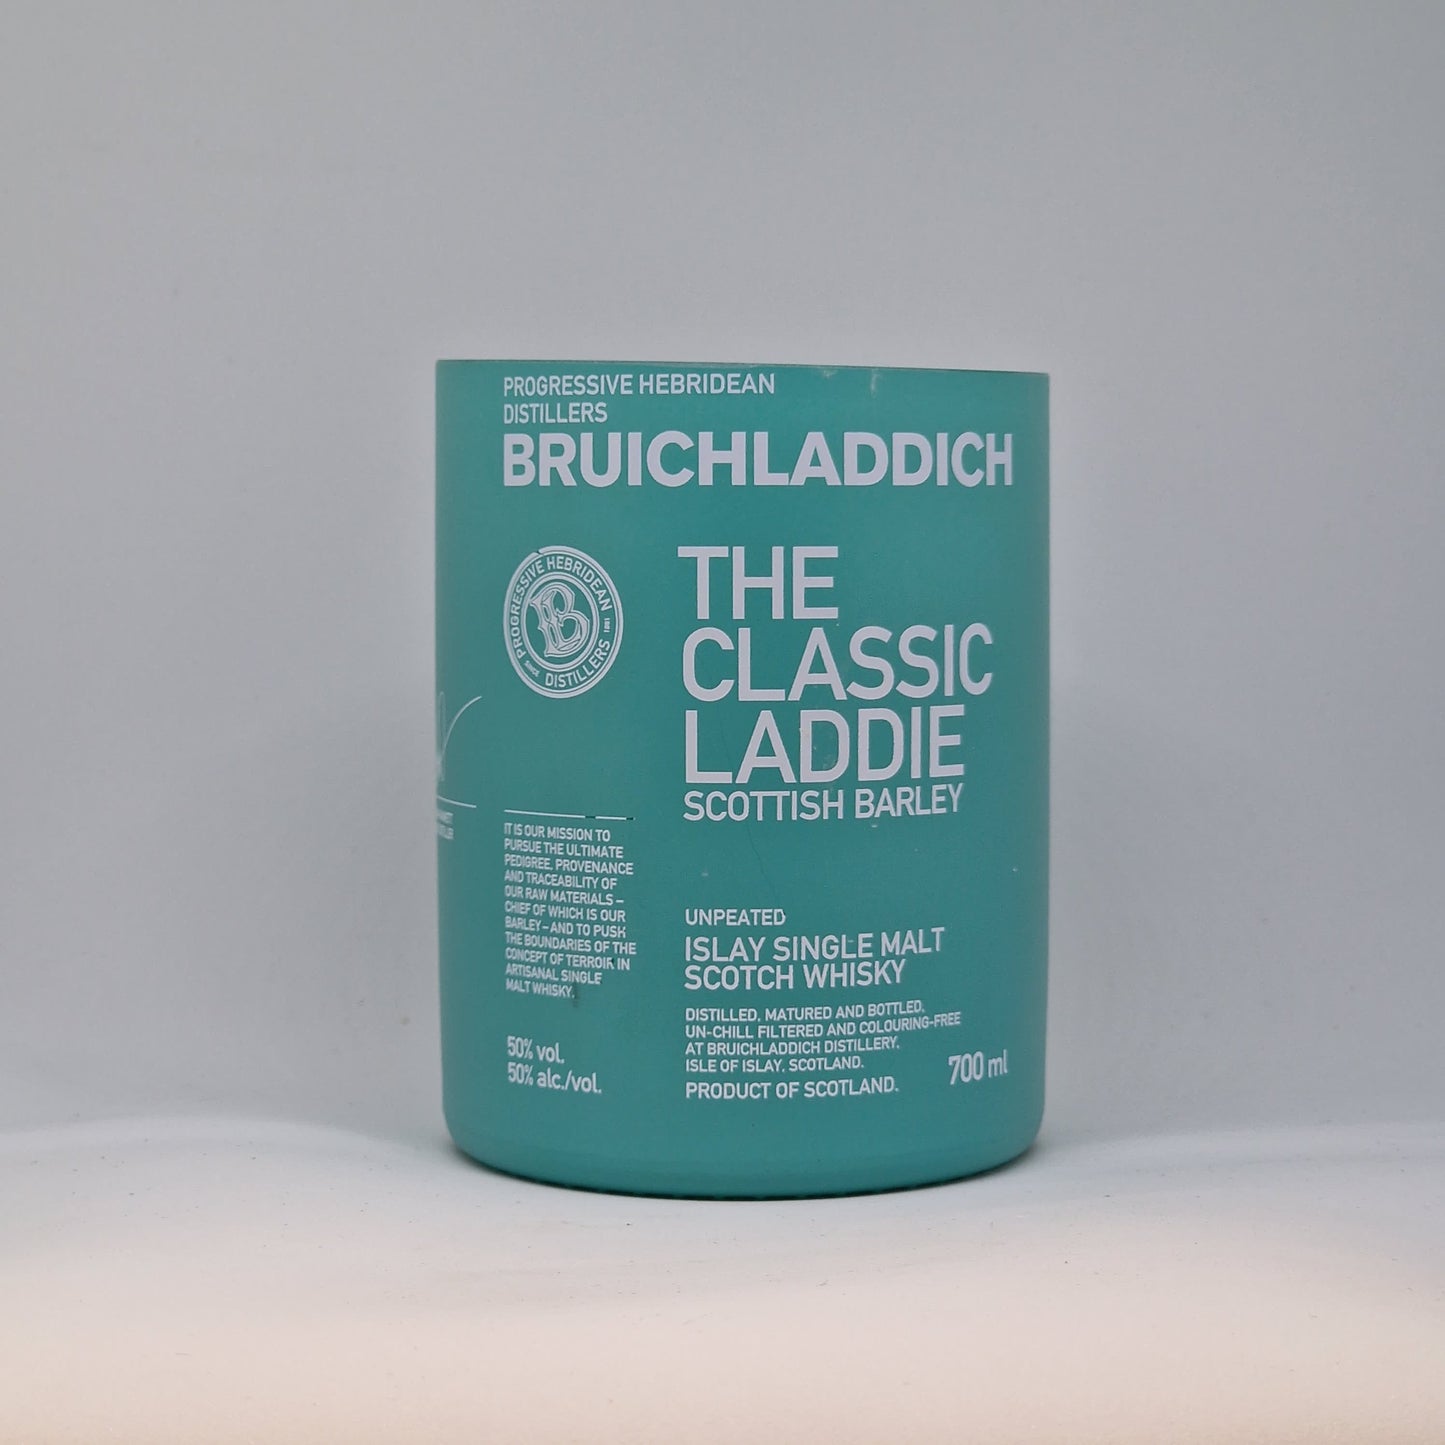 Bruichladdich Whisky Bottle Candle